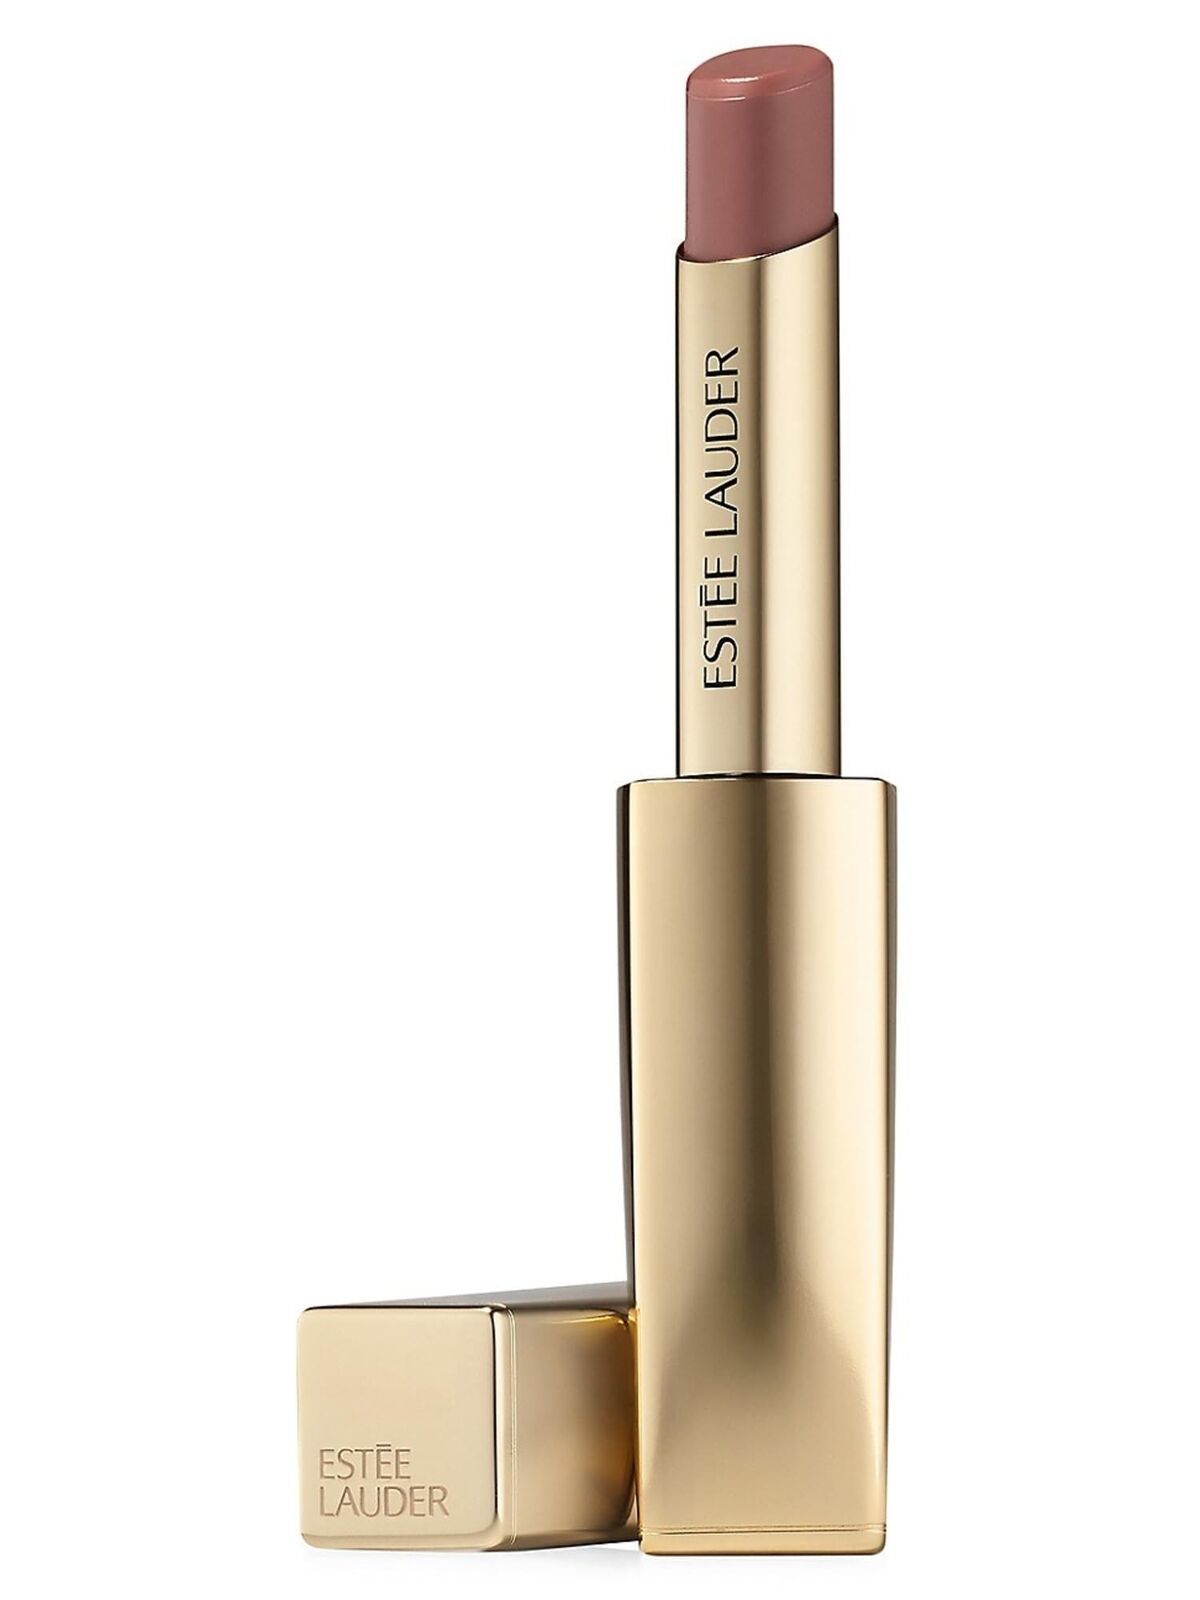 Estee Lauder Pure Color Illuminating Shine Lipstick 901 Born Flirt - $21.53